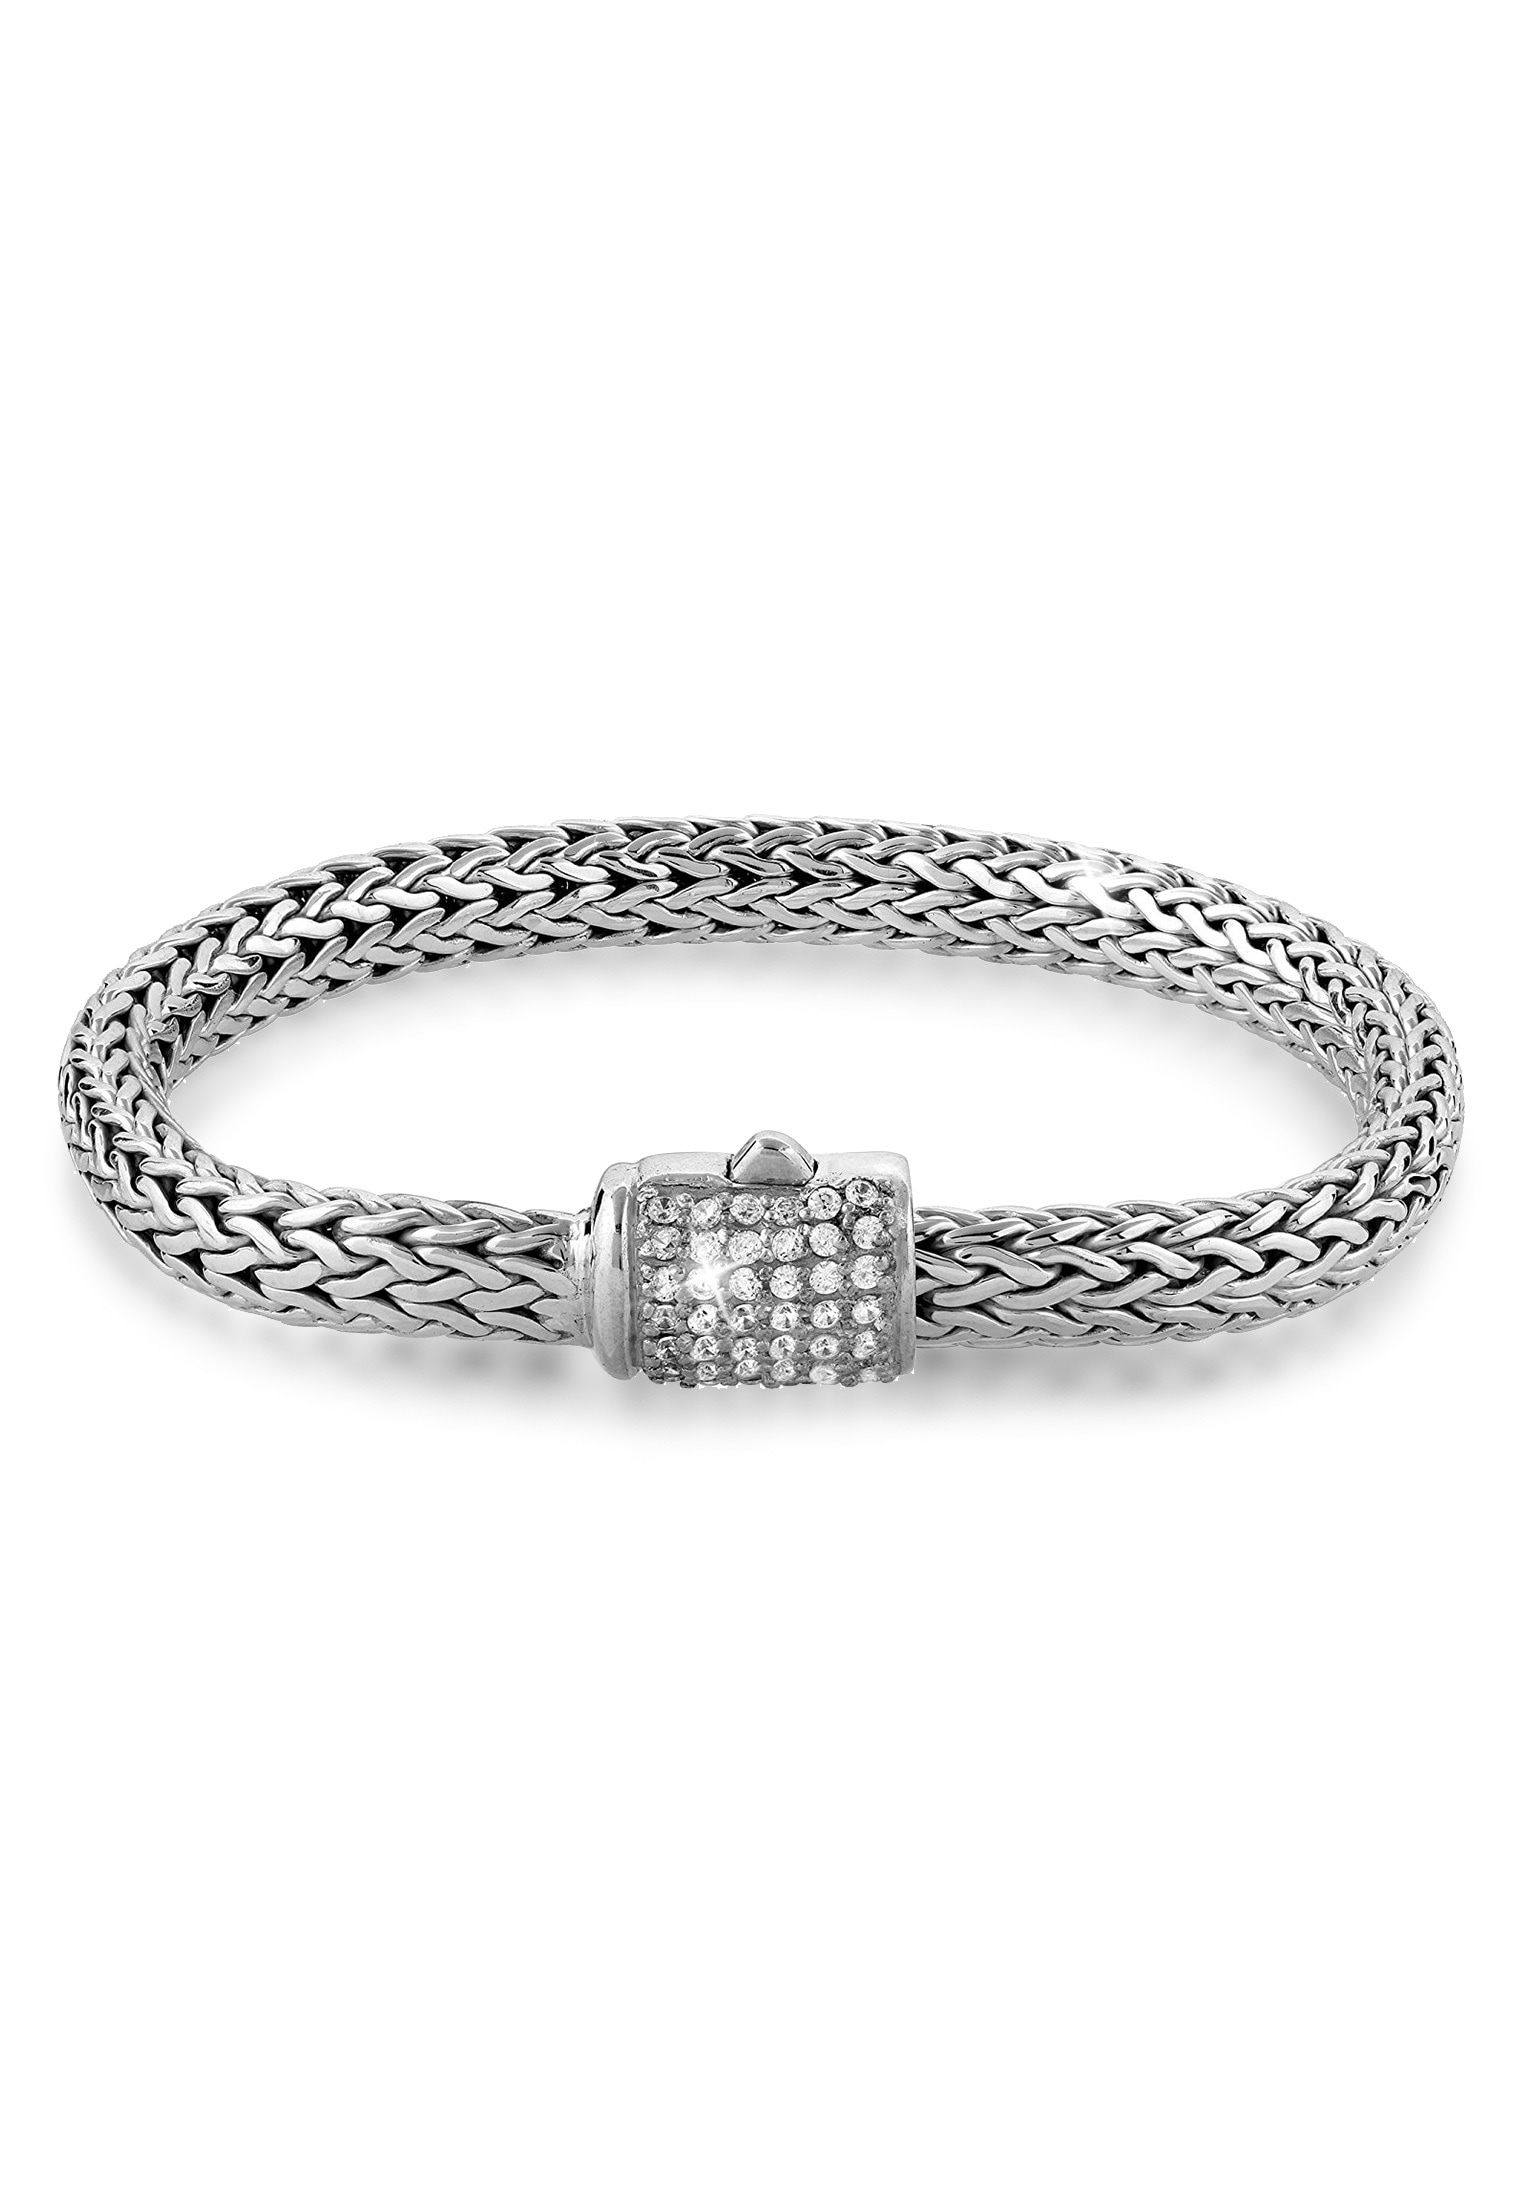 Kuzzoi Kristalle Silber« 925 Armband Zirkonia »Gliederarmband Damen